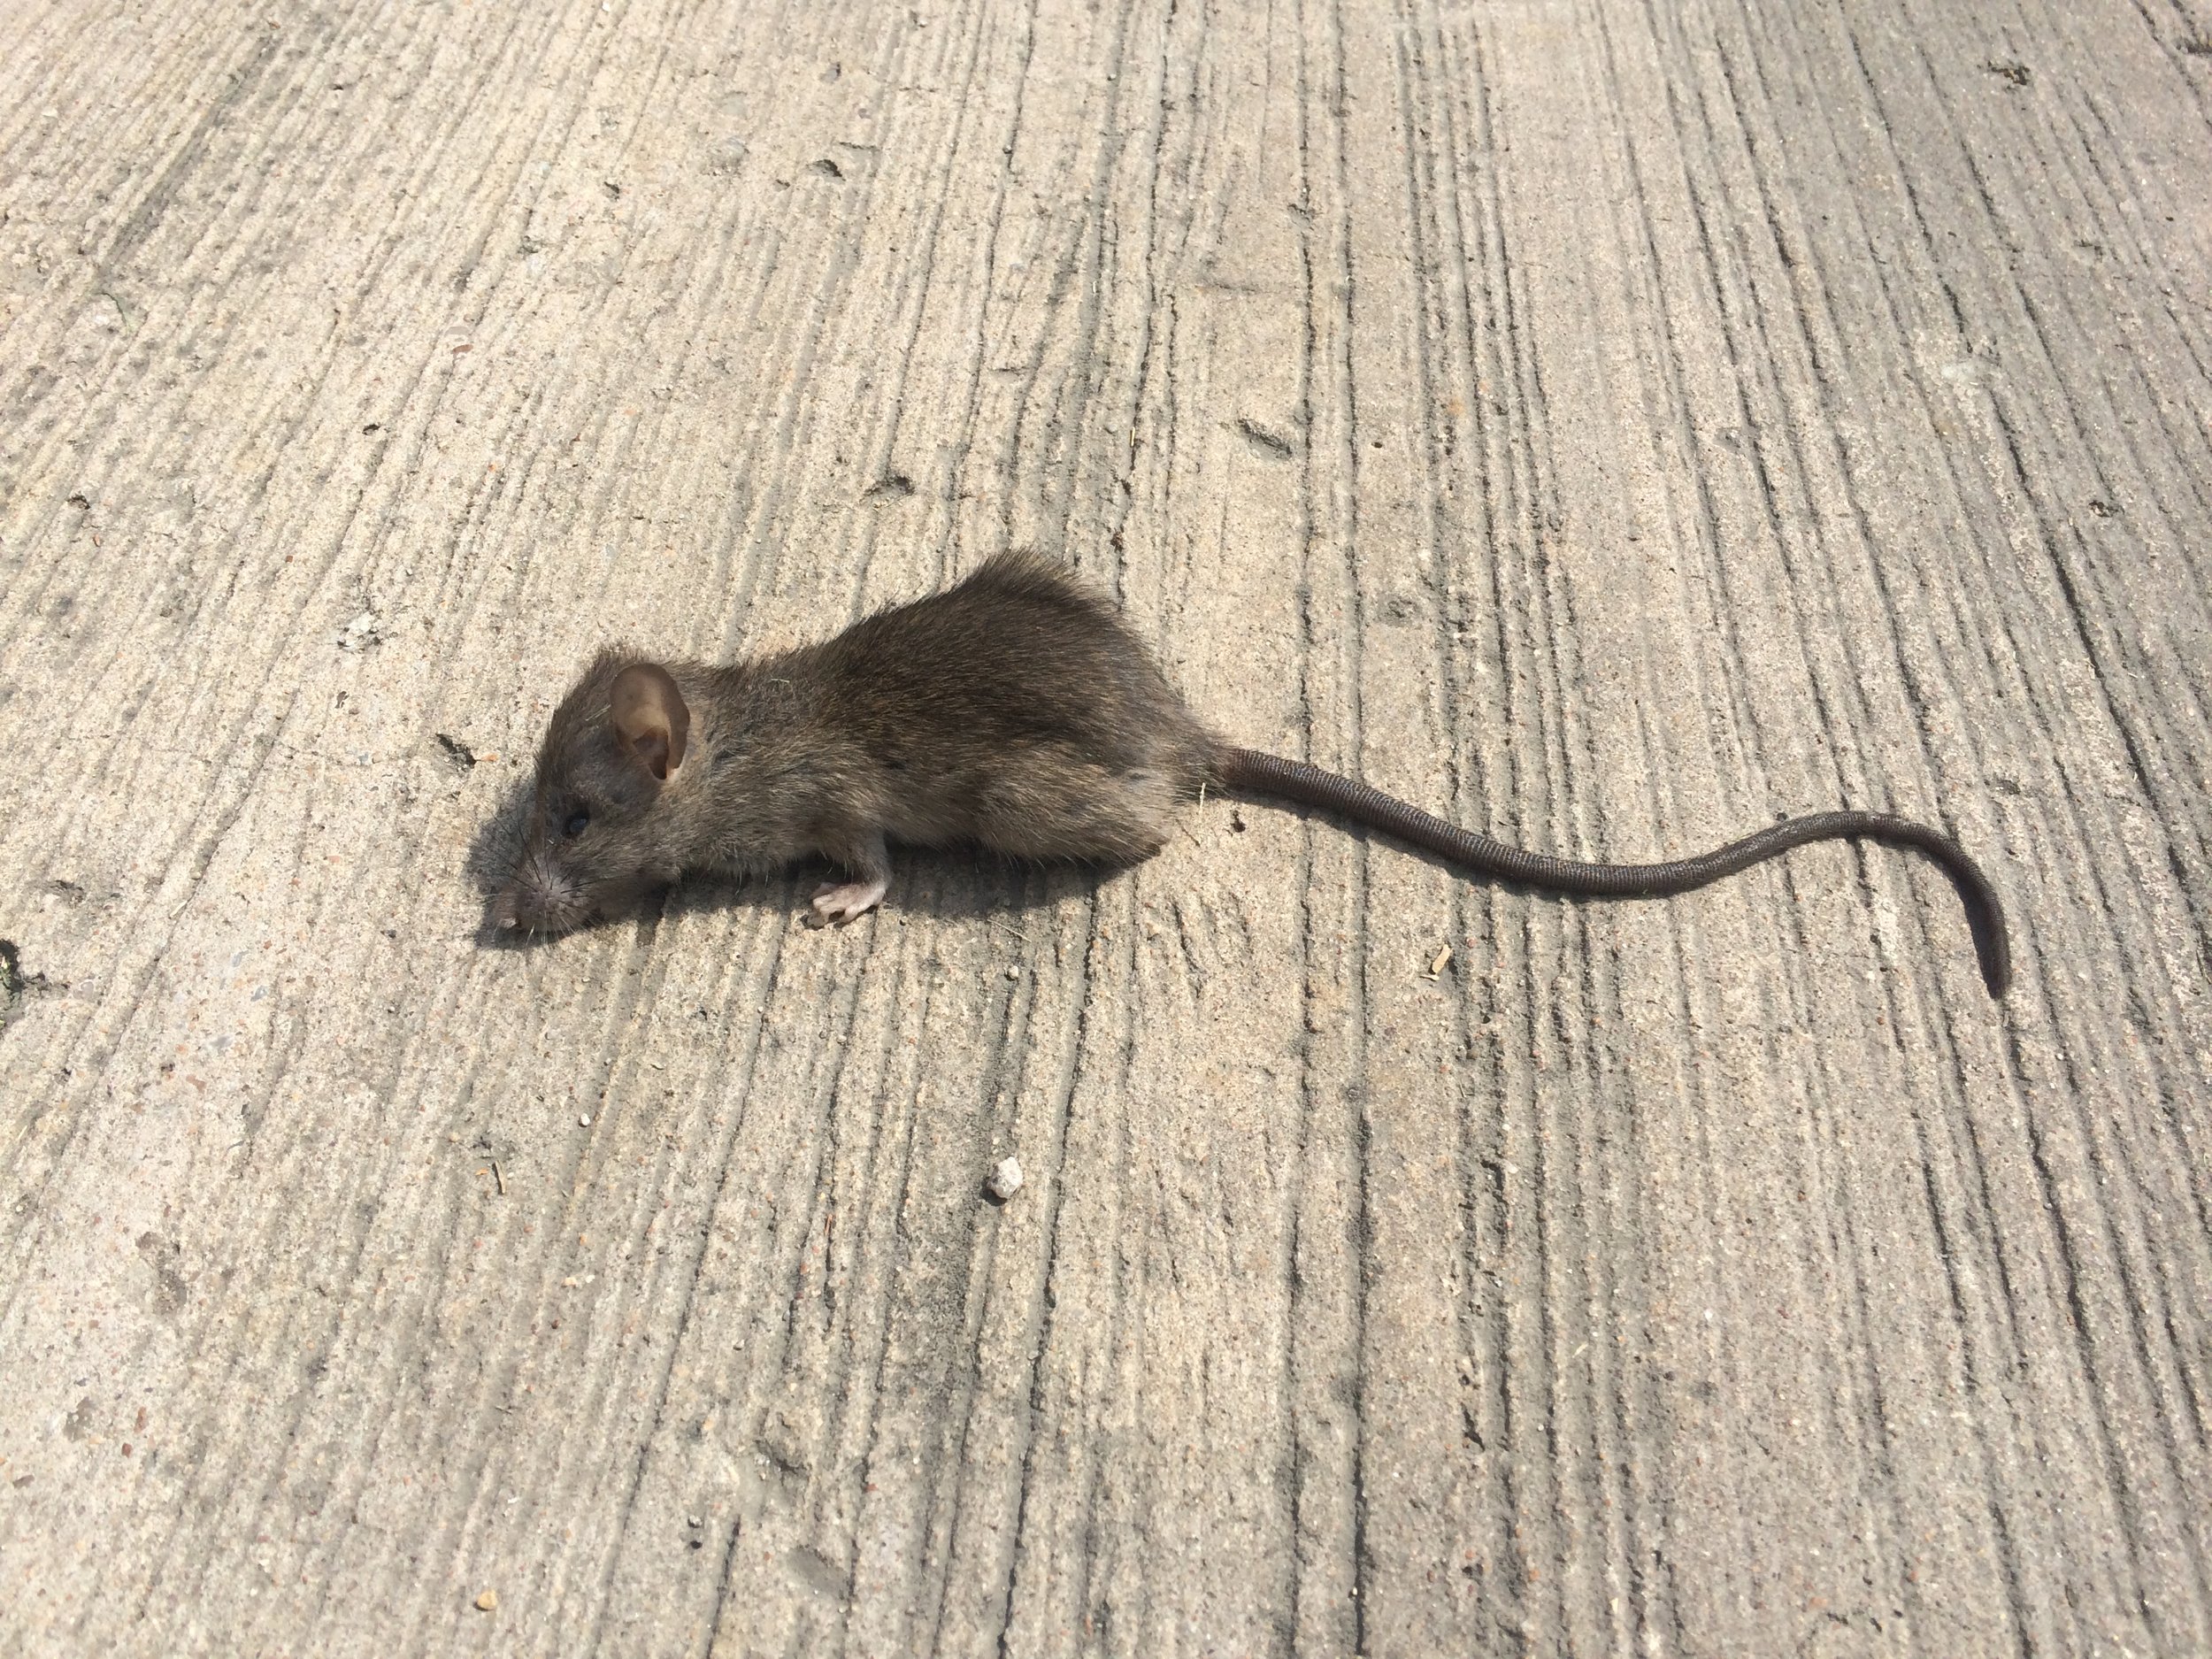 The Trapper Hidden Kill Mouse Trap- no-mess capture & kill